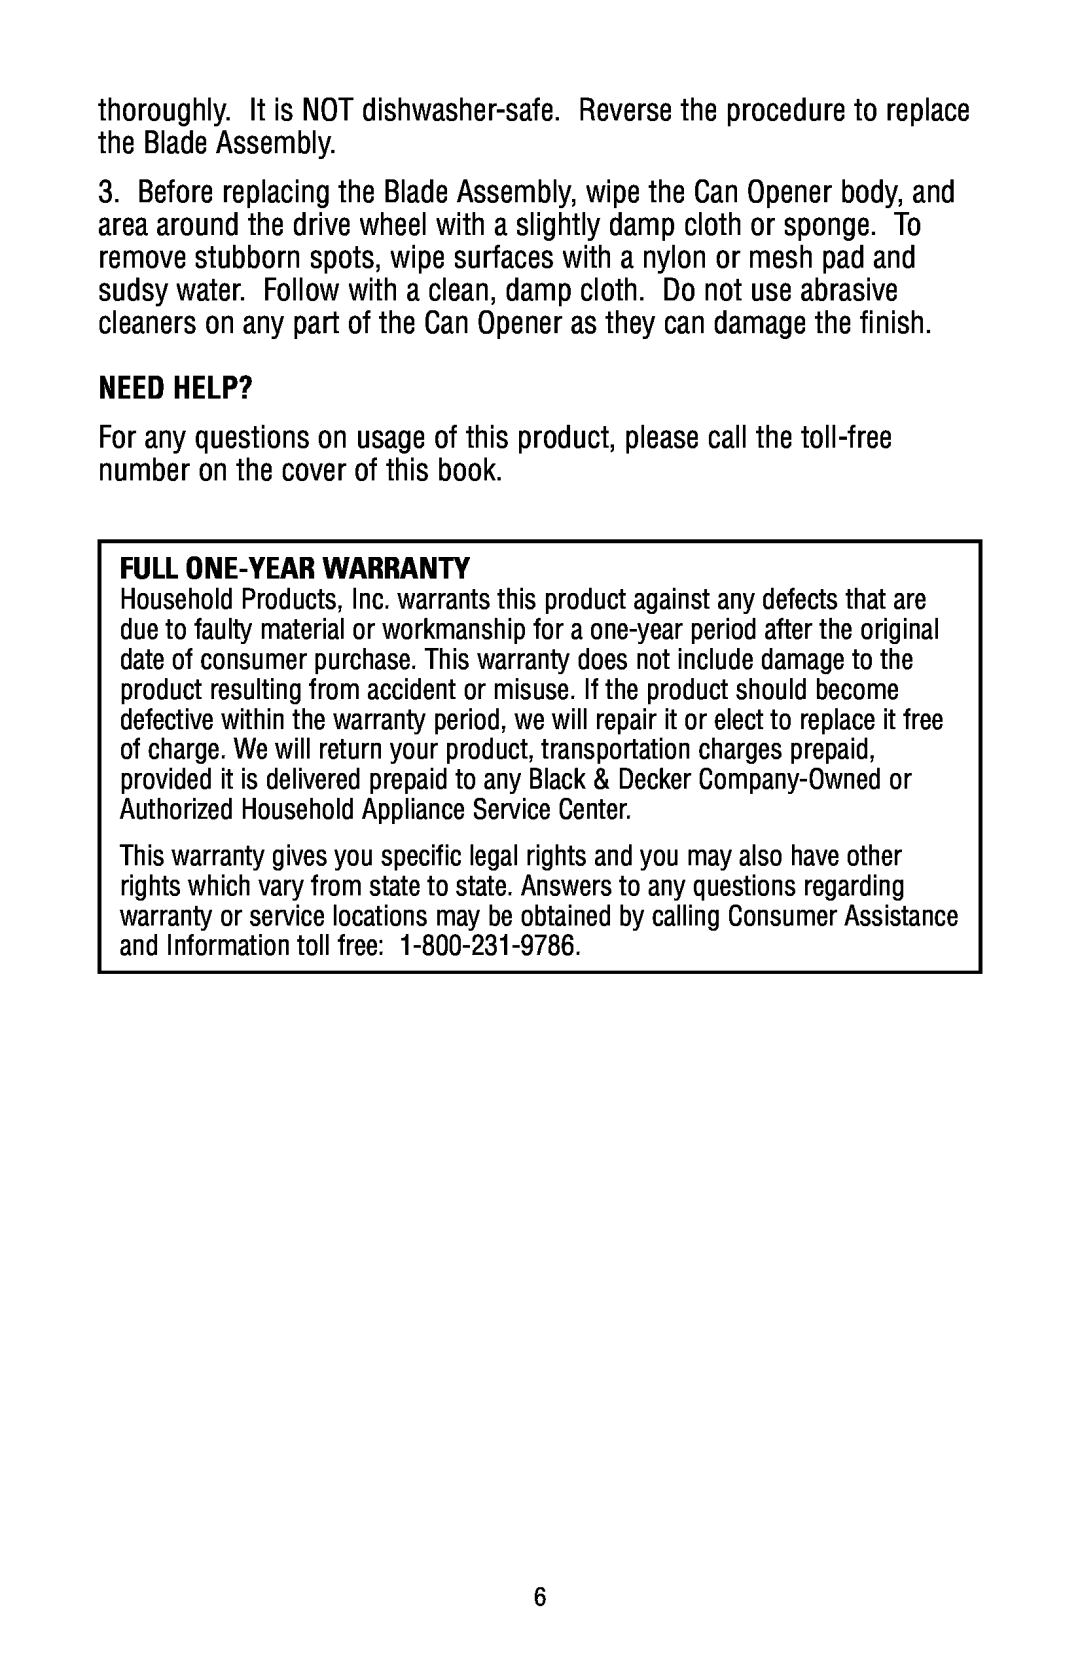 Black & Decker MGD150 owner manual Need Help?, Full One-Yearwarranty 